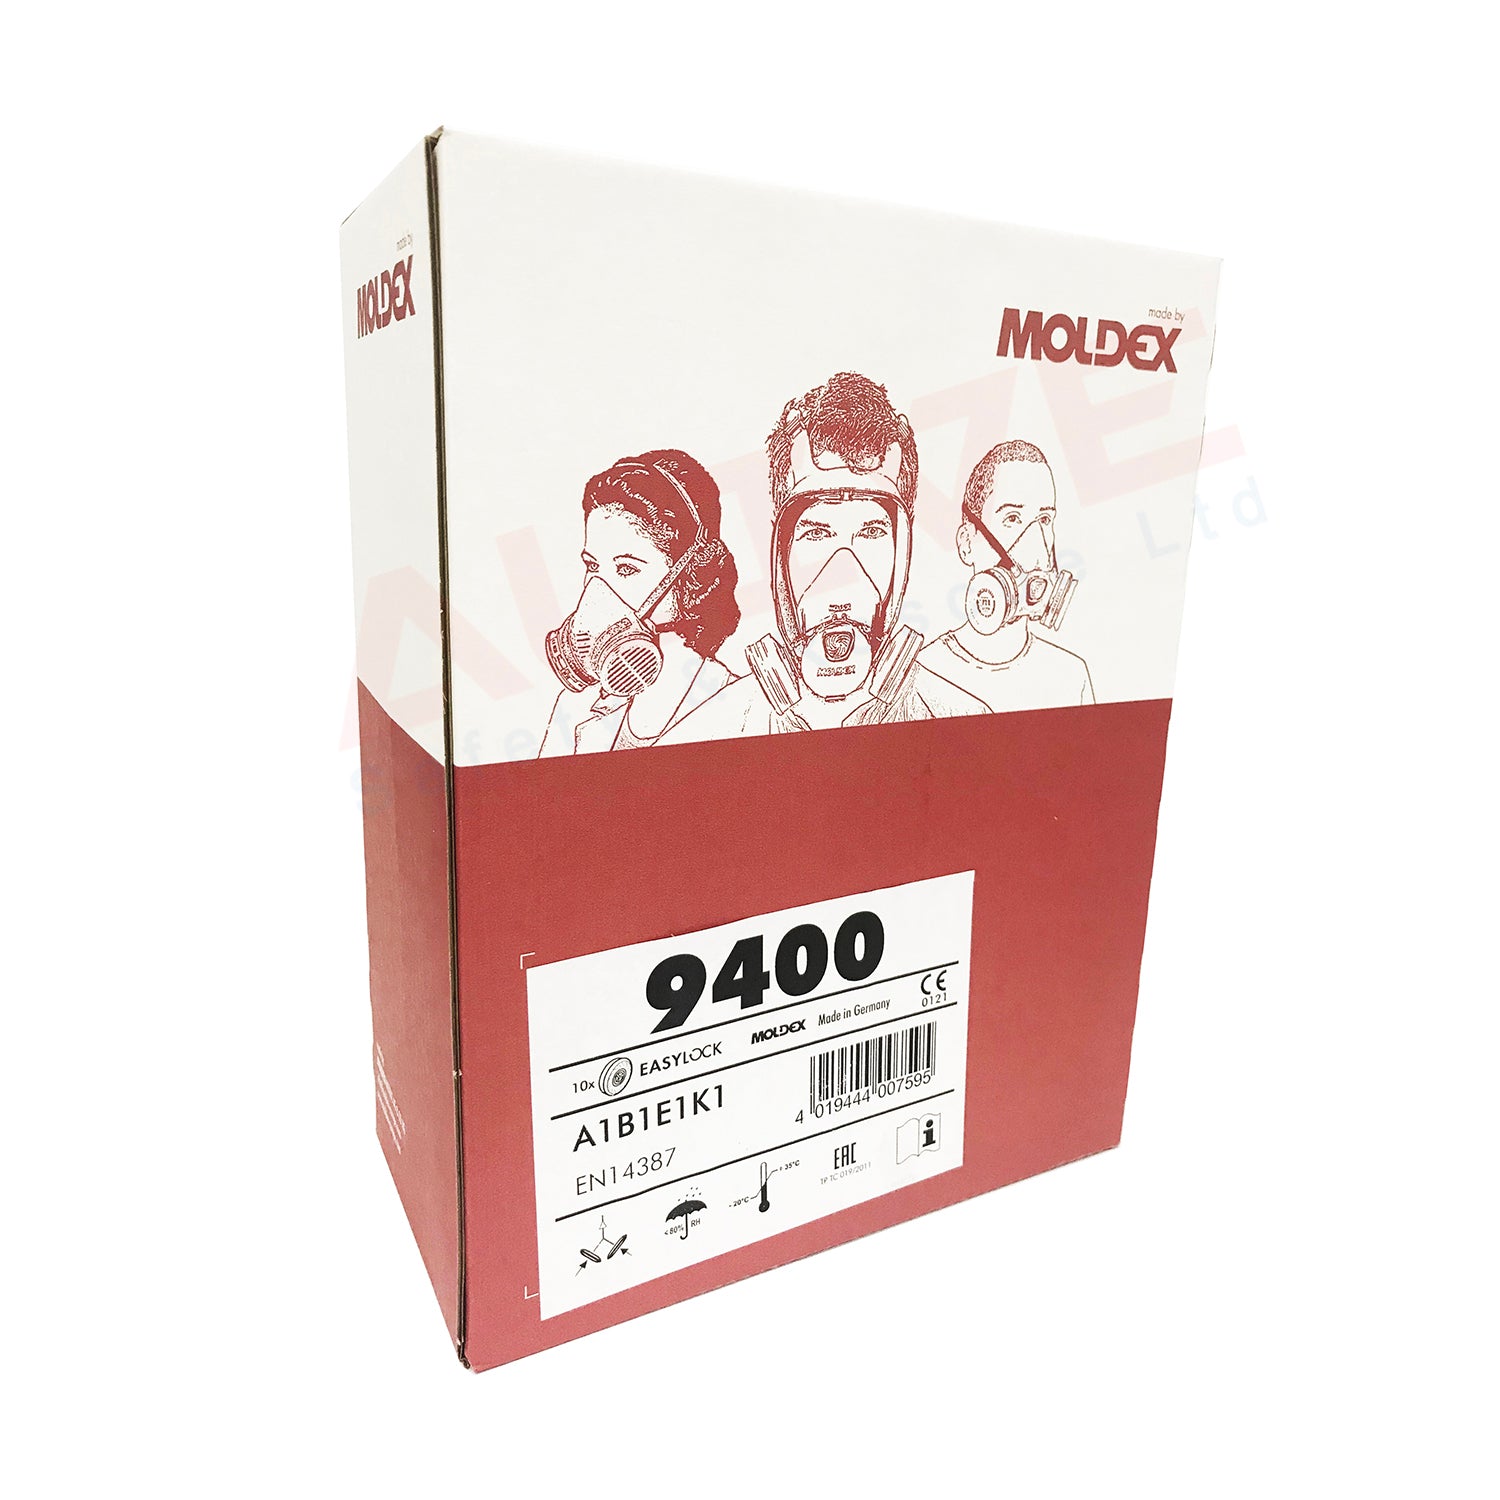 Moldex 9400 EasyLock A1B1E1K1 Gas Filters Box